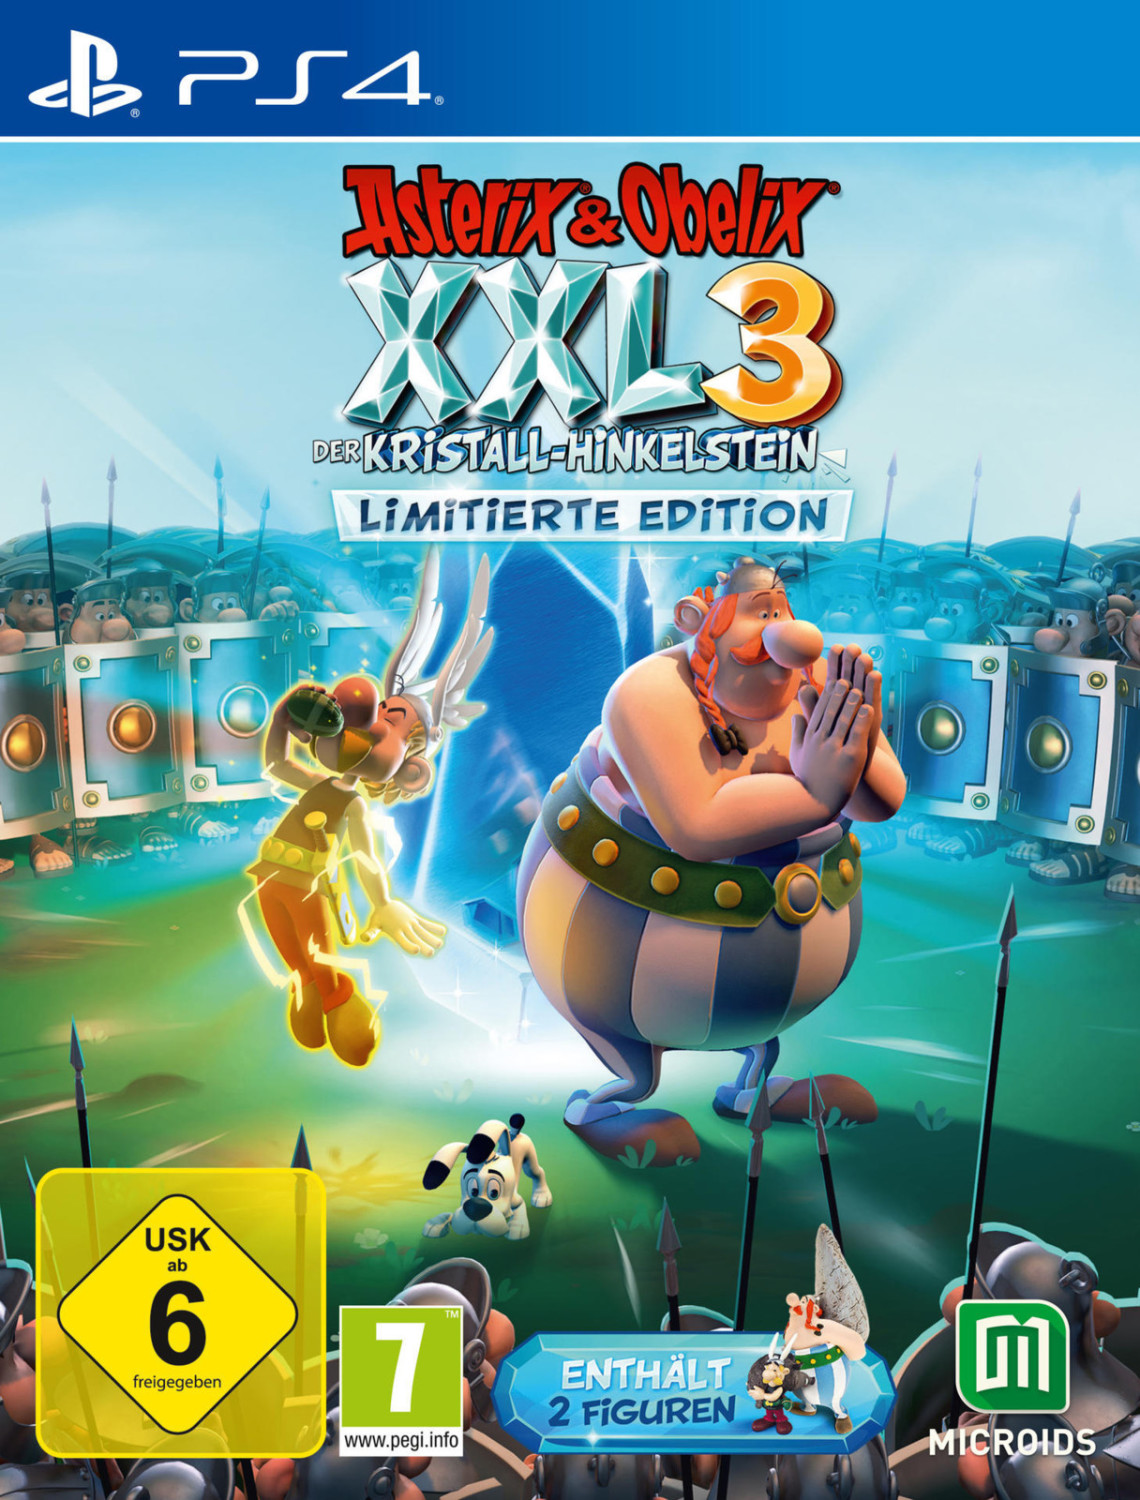 Asterix & Obelix XXL 3: Der Kristall-Hinkelstein - Limited Edition (PS4)